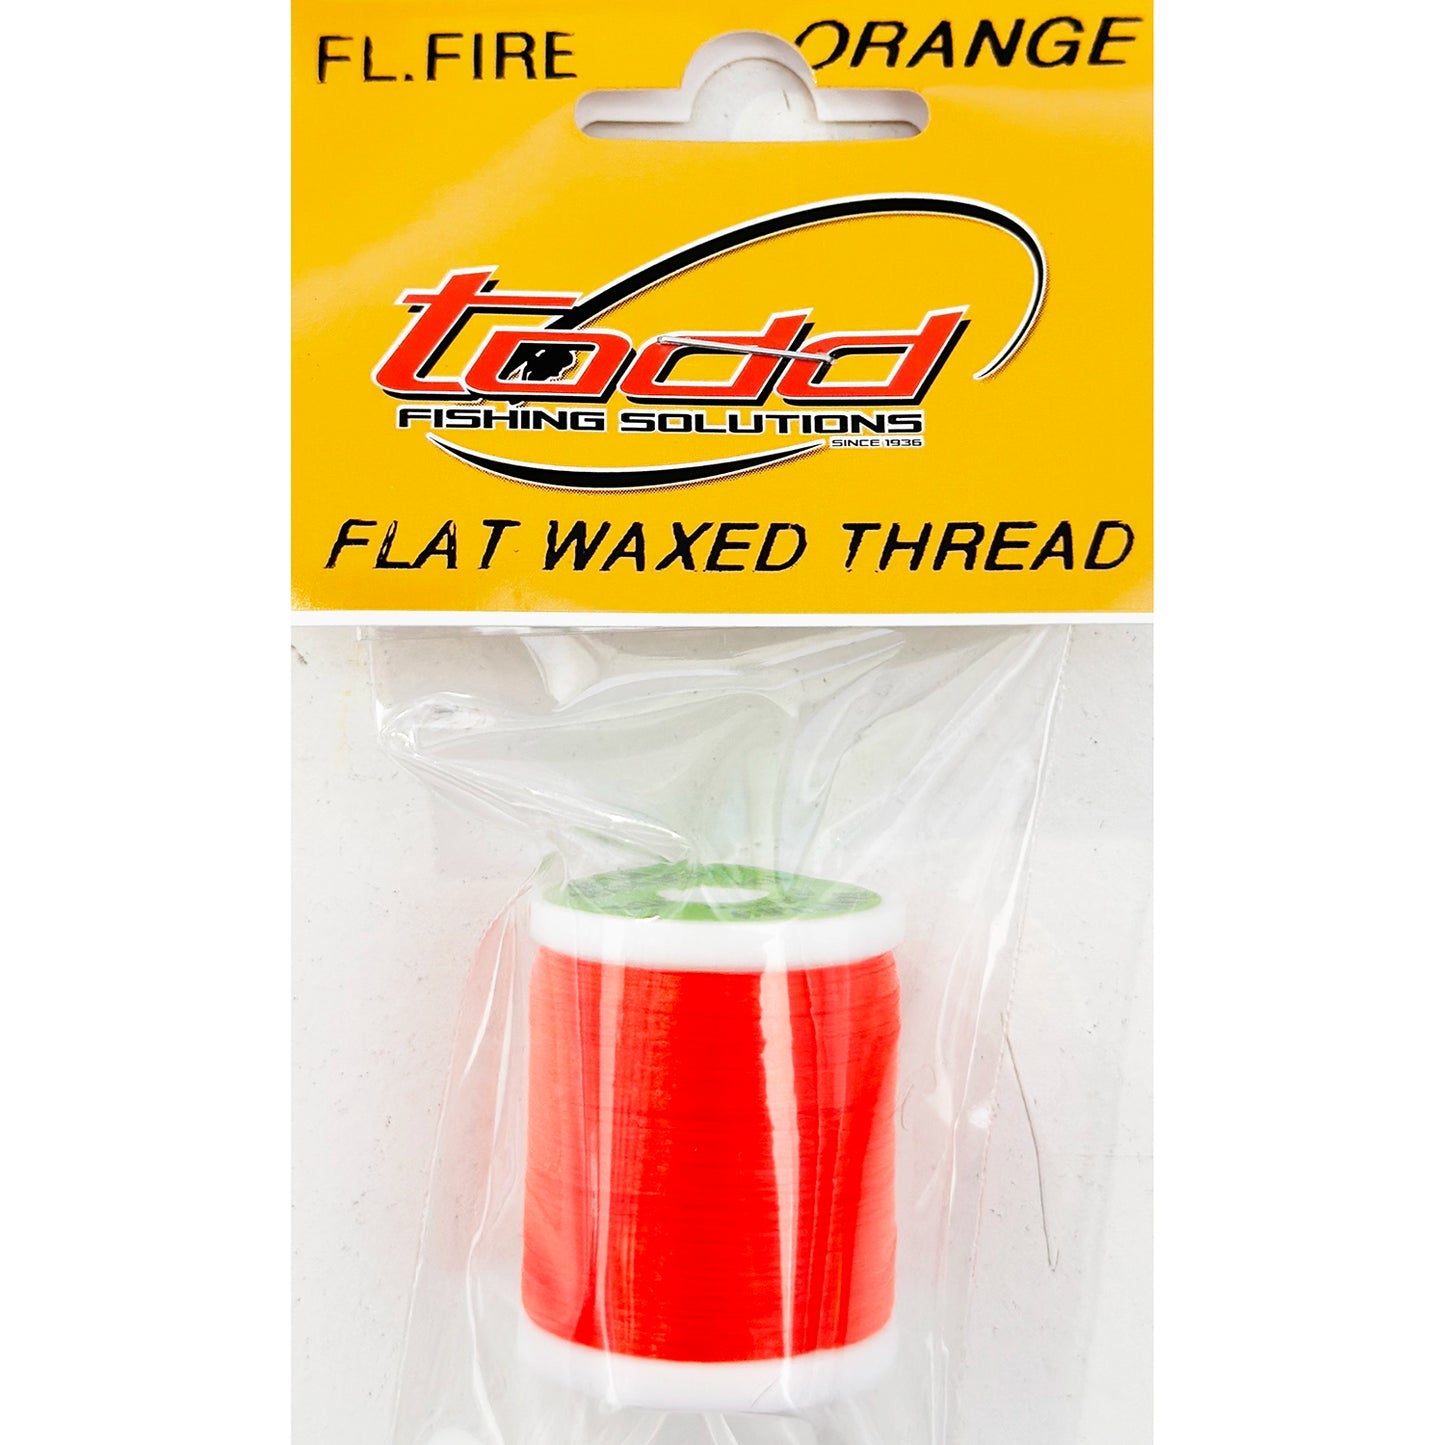 Todd Flat Waxed Thread (210 Denier)-Fly Fishing - Fly Components-Todd-Fl Fire Orange-Fishing Station